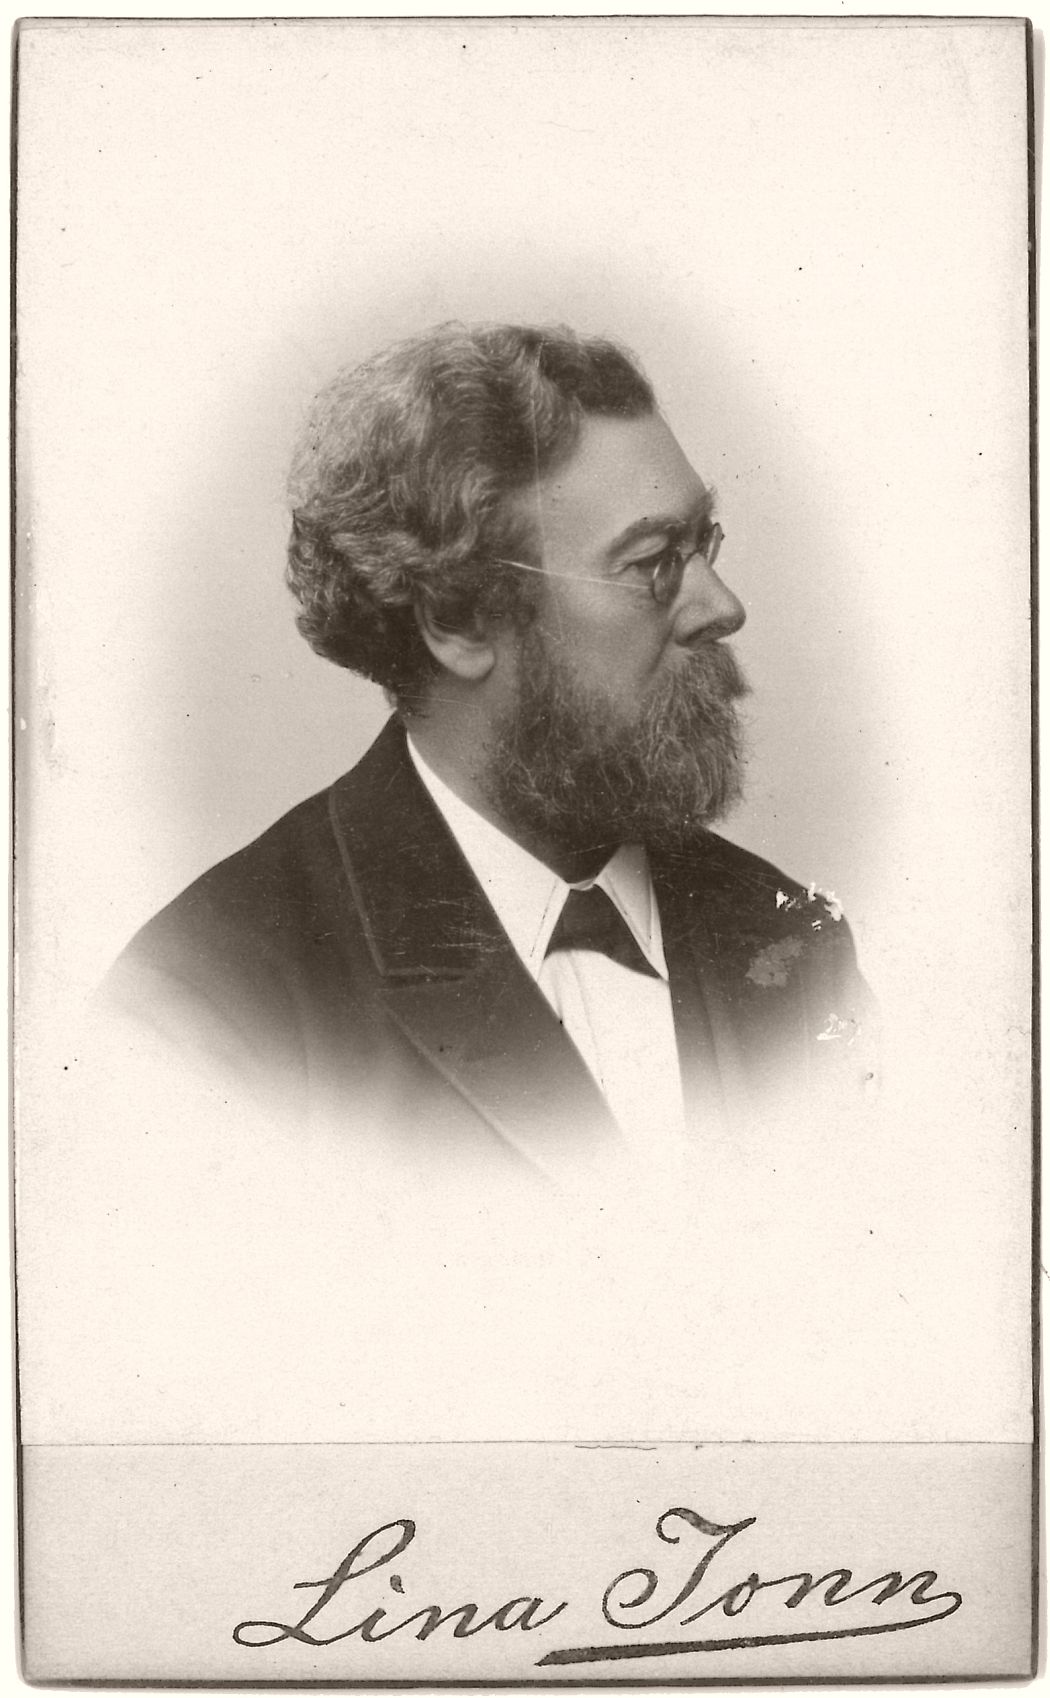 Johan Lang (1833-1902), Swedish chemist, medical scientist and professor at Lund University.